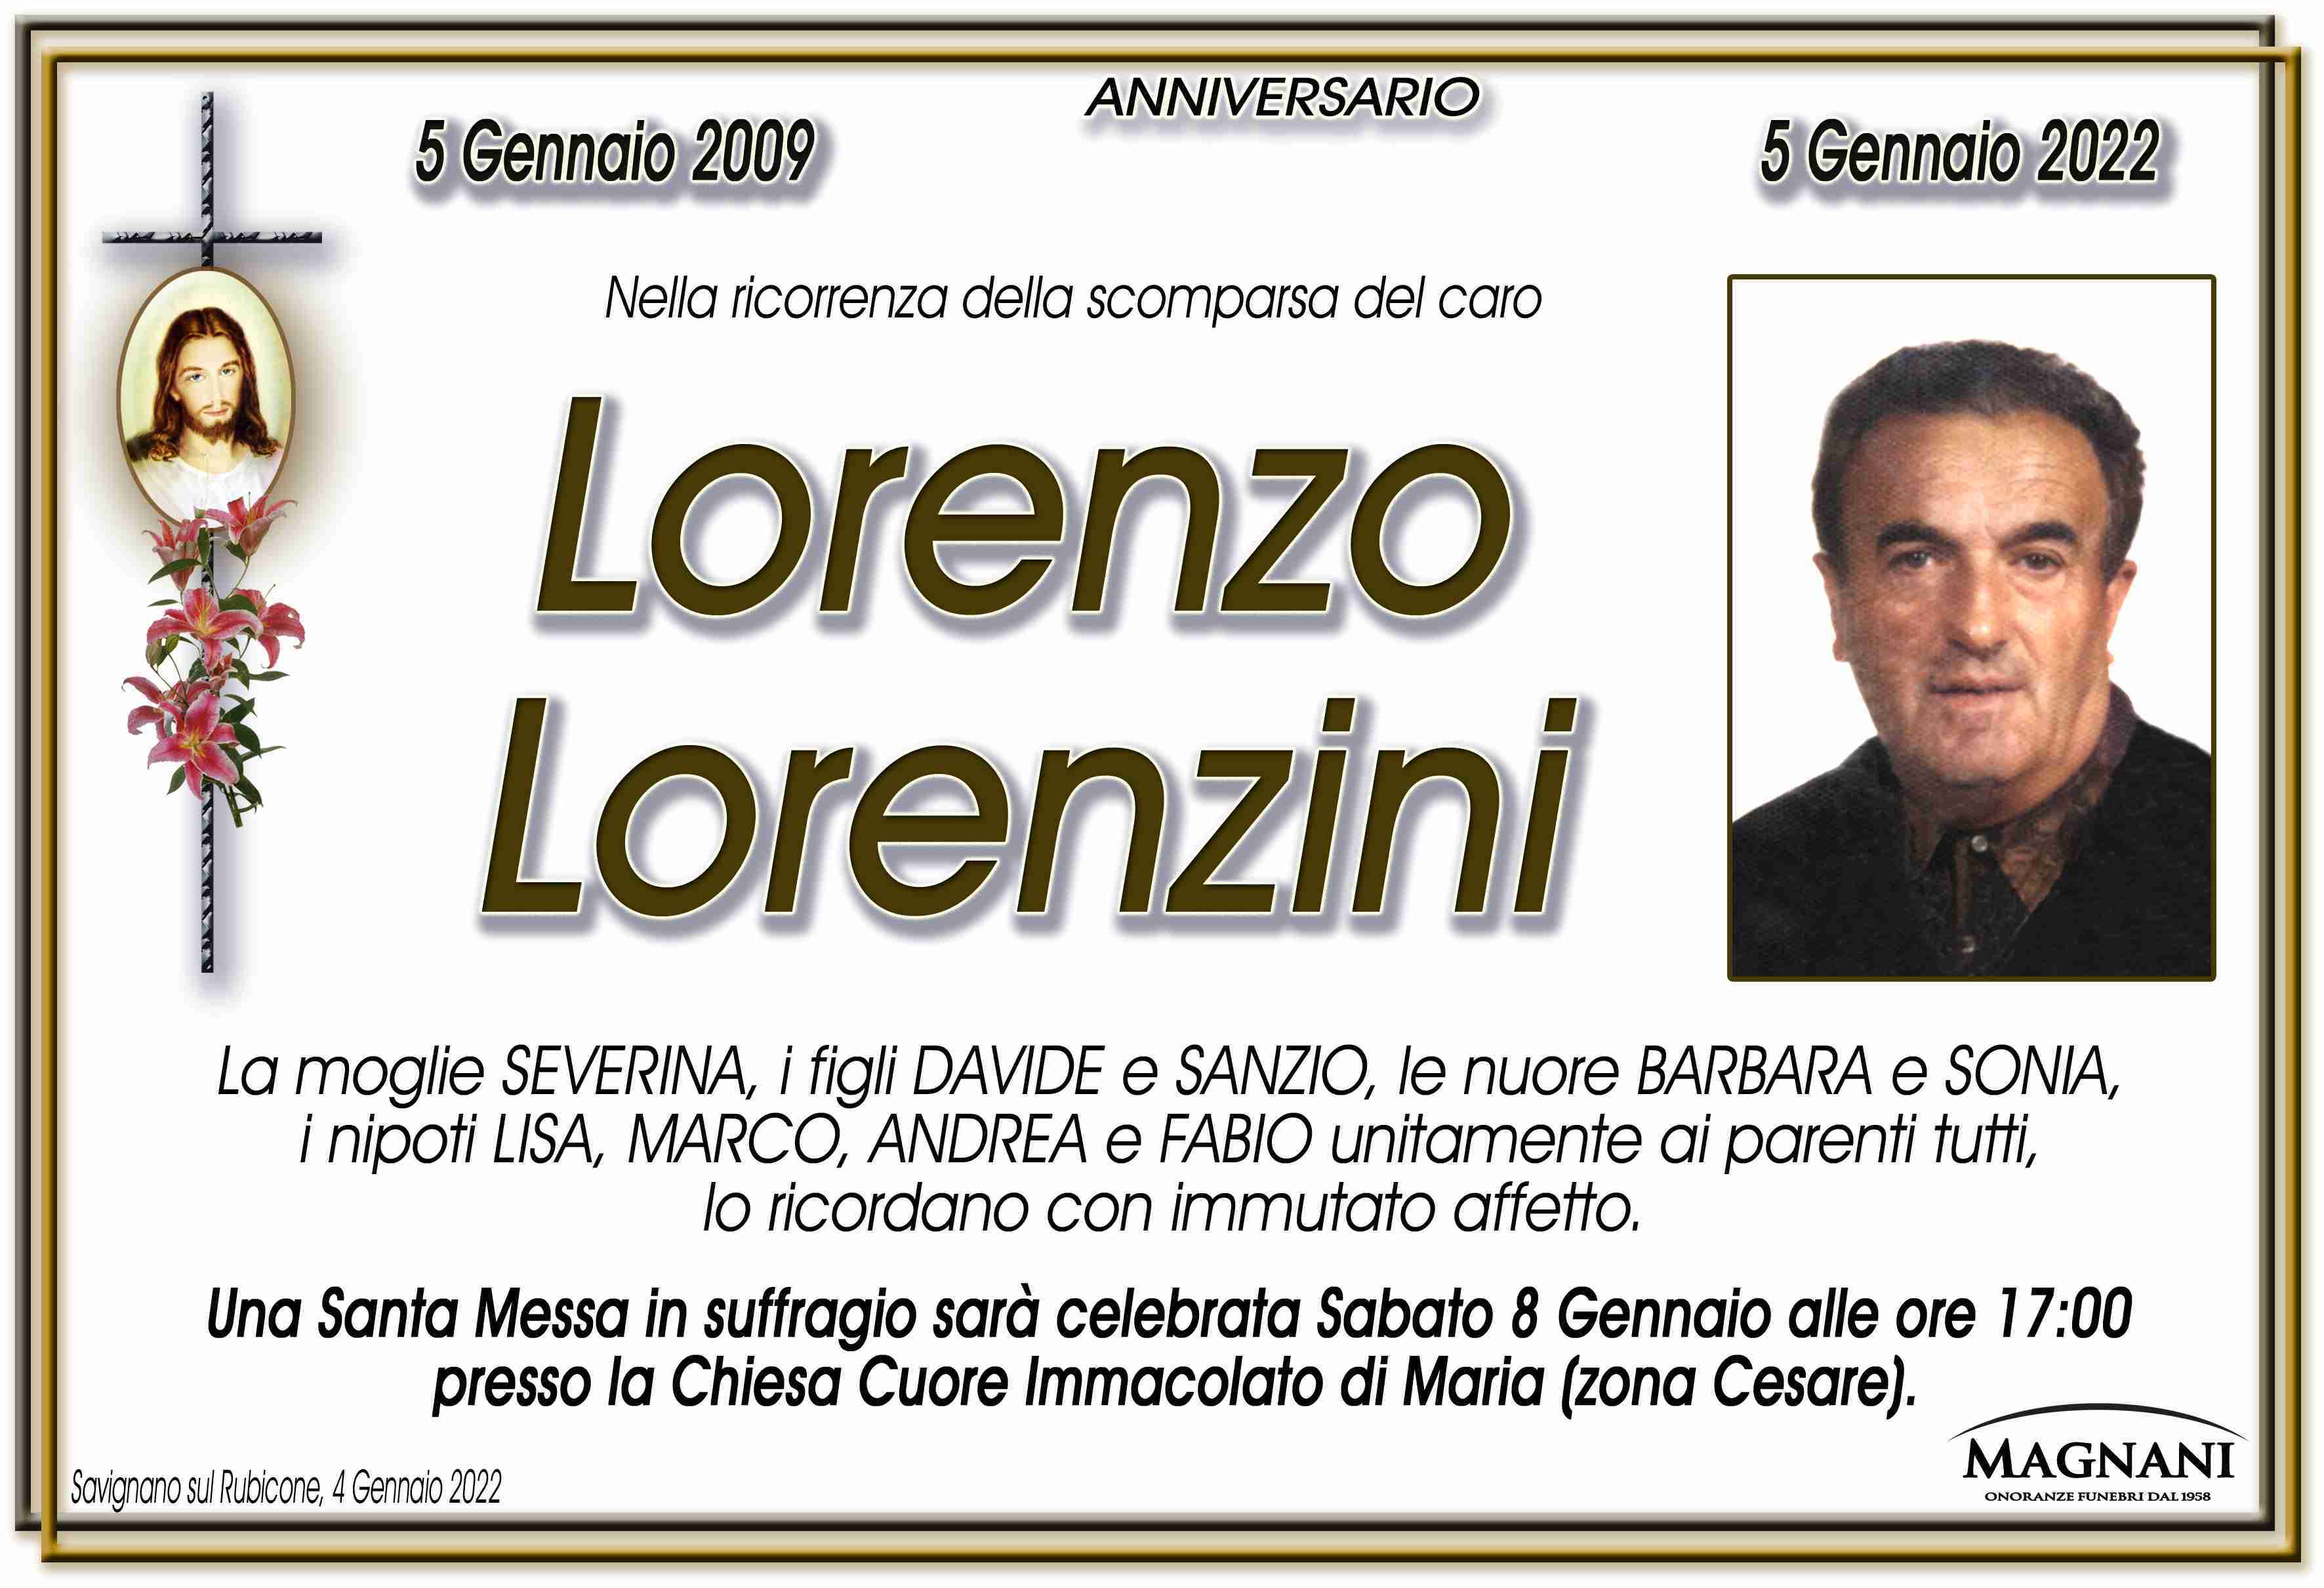 Lorenzo Lorenzini